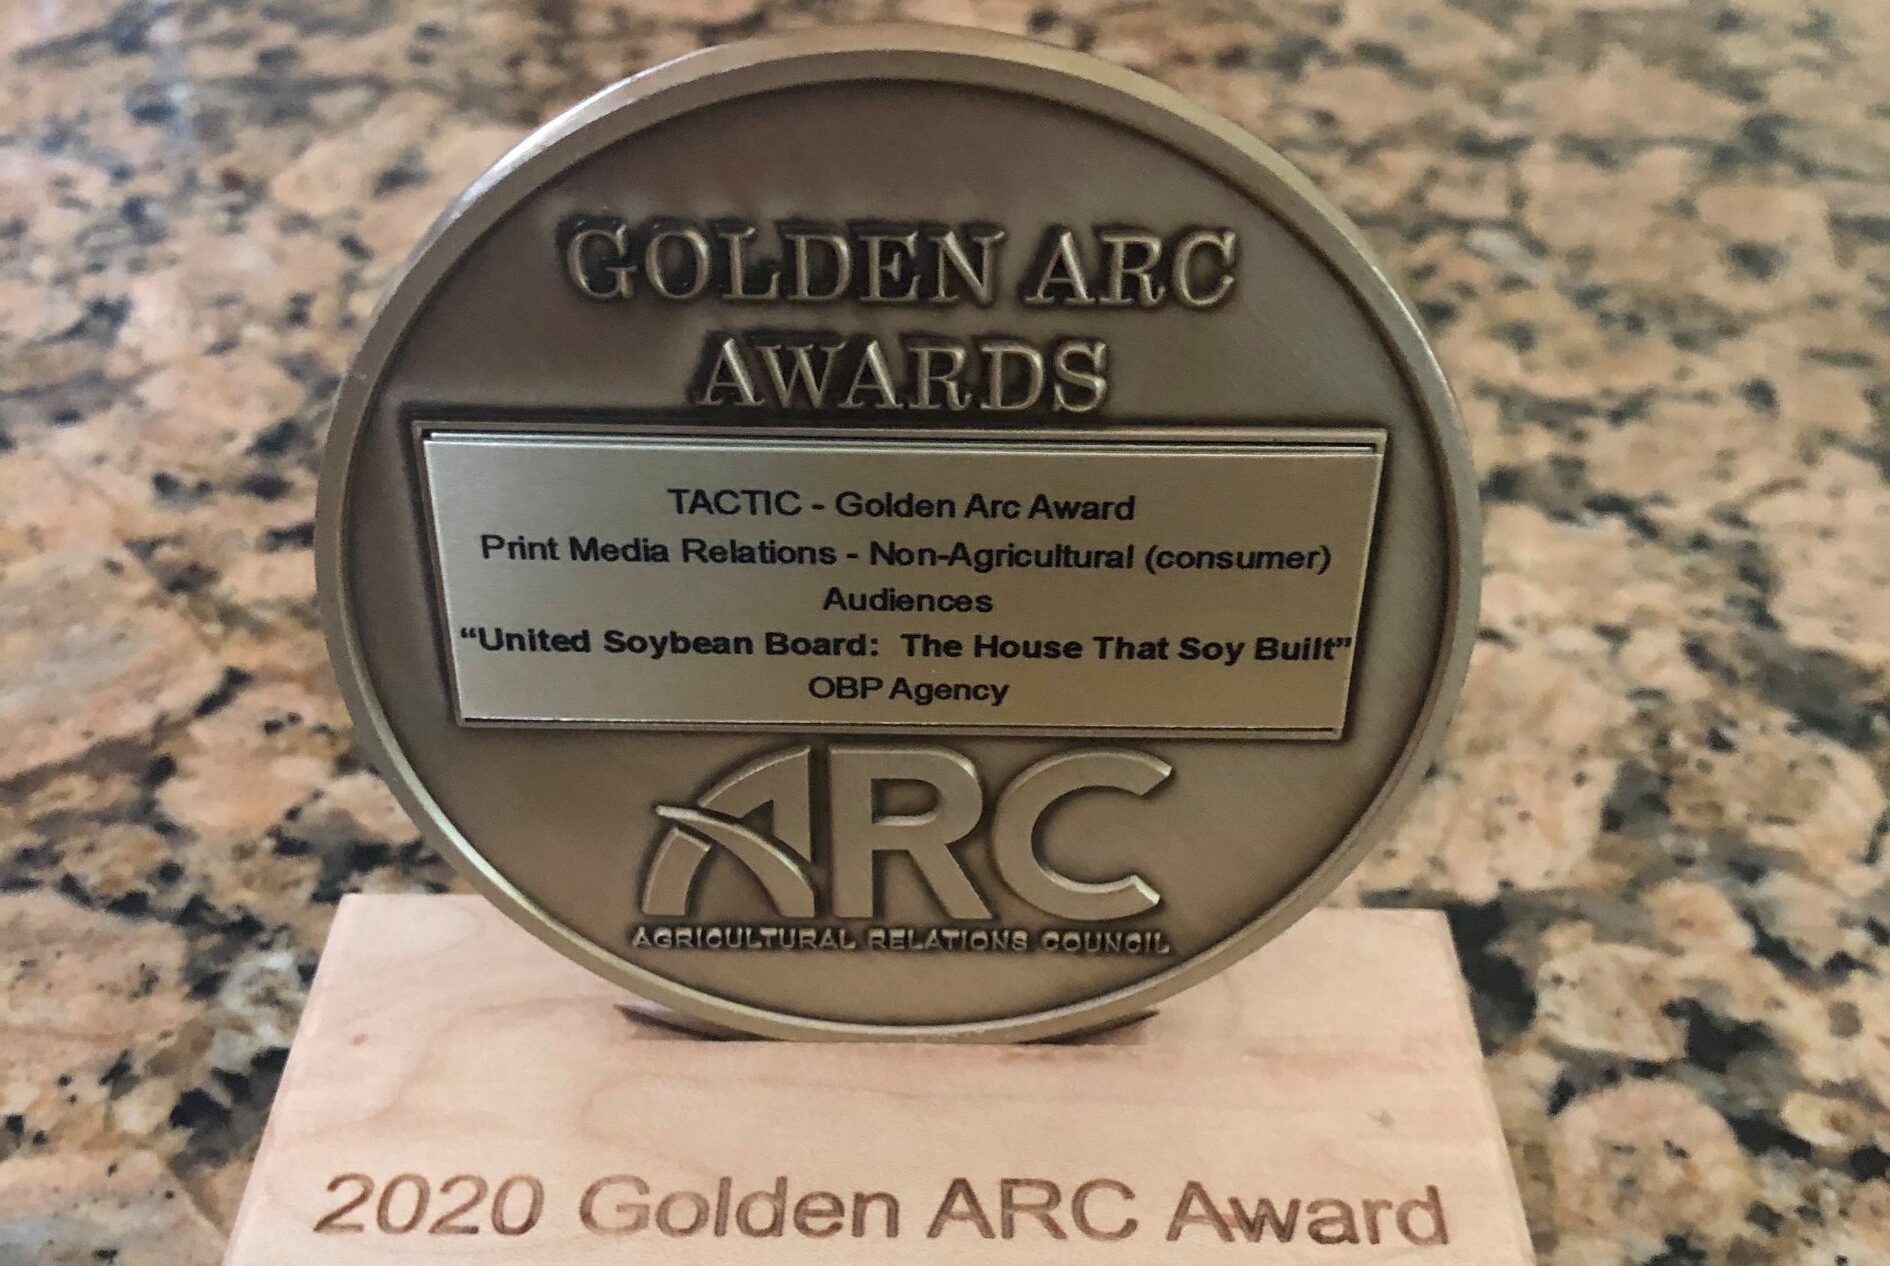 A 2020 Golden ARC Award sits on a countertop.